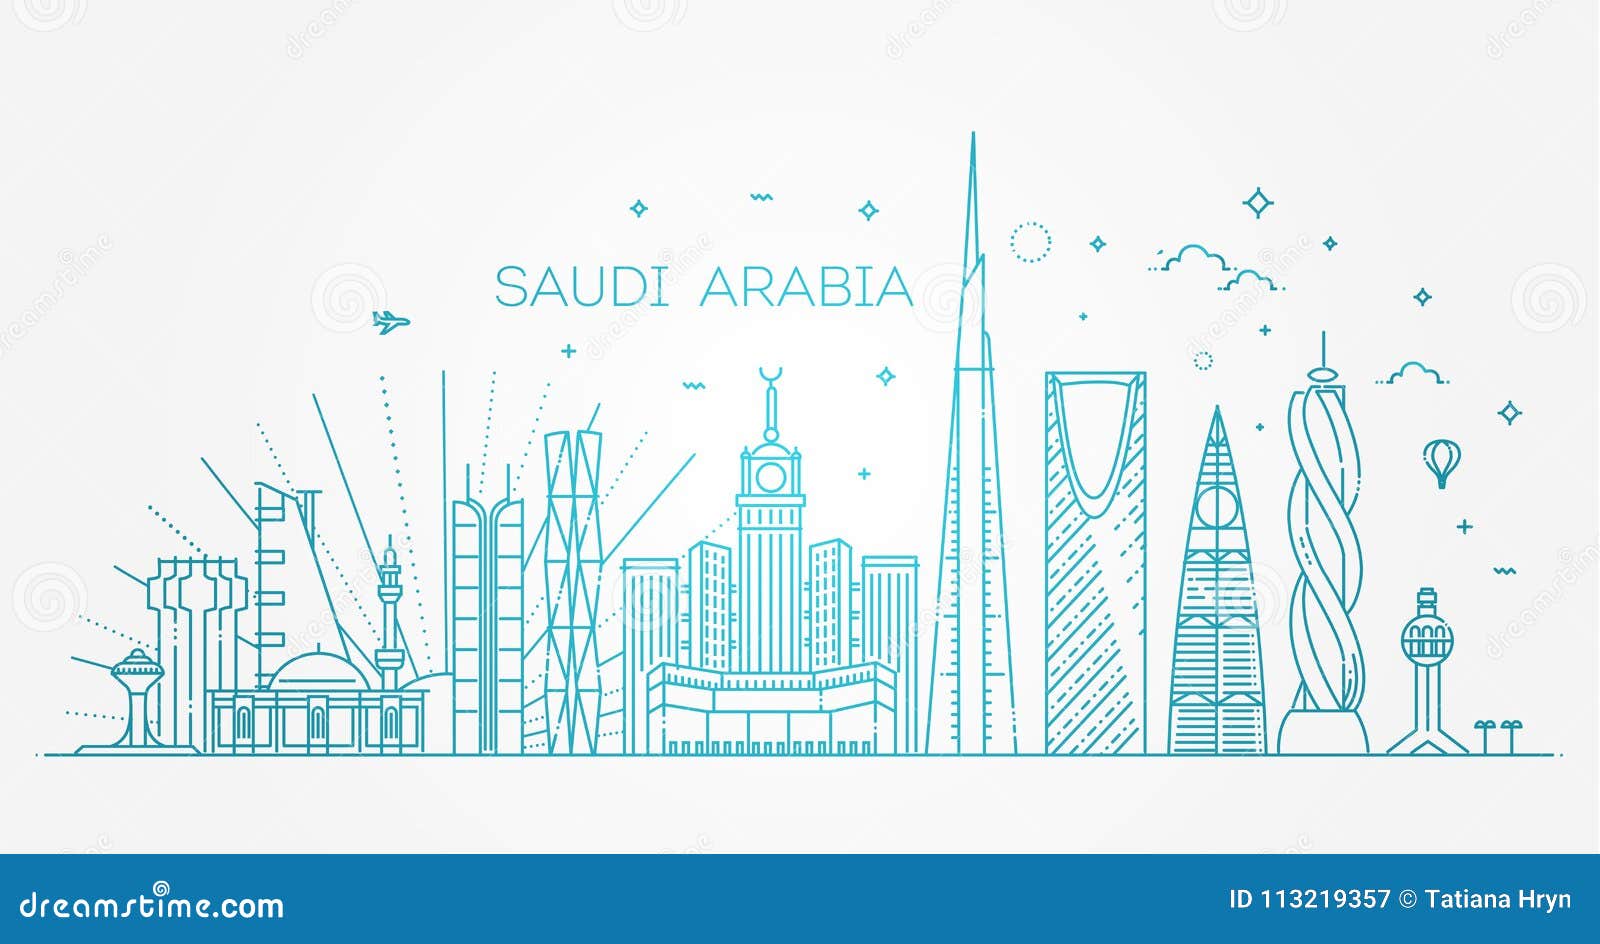 saudi arabia detailed skyline. travel and tourism background